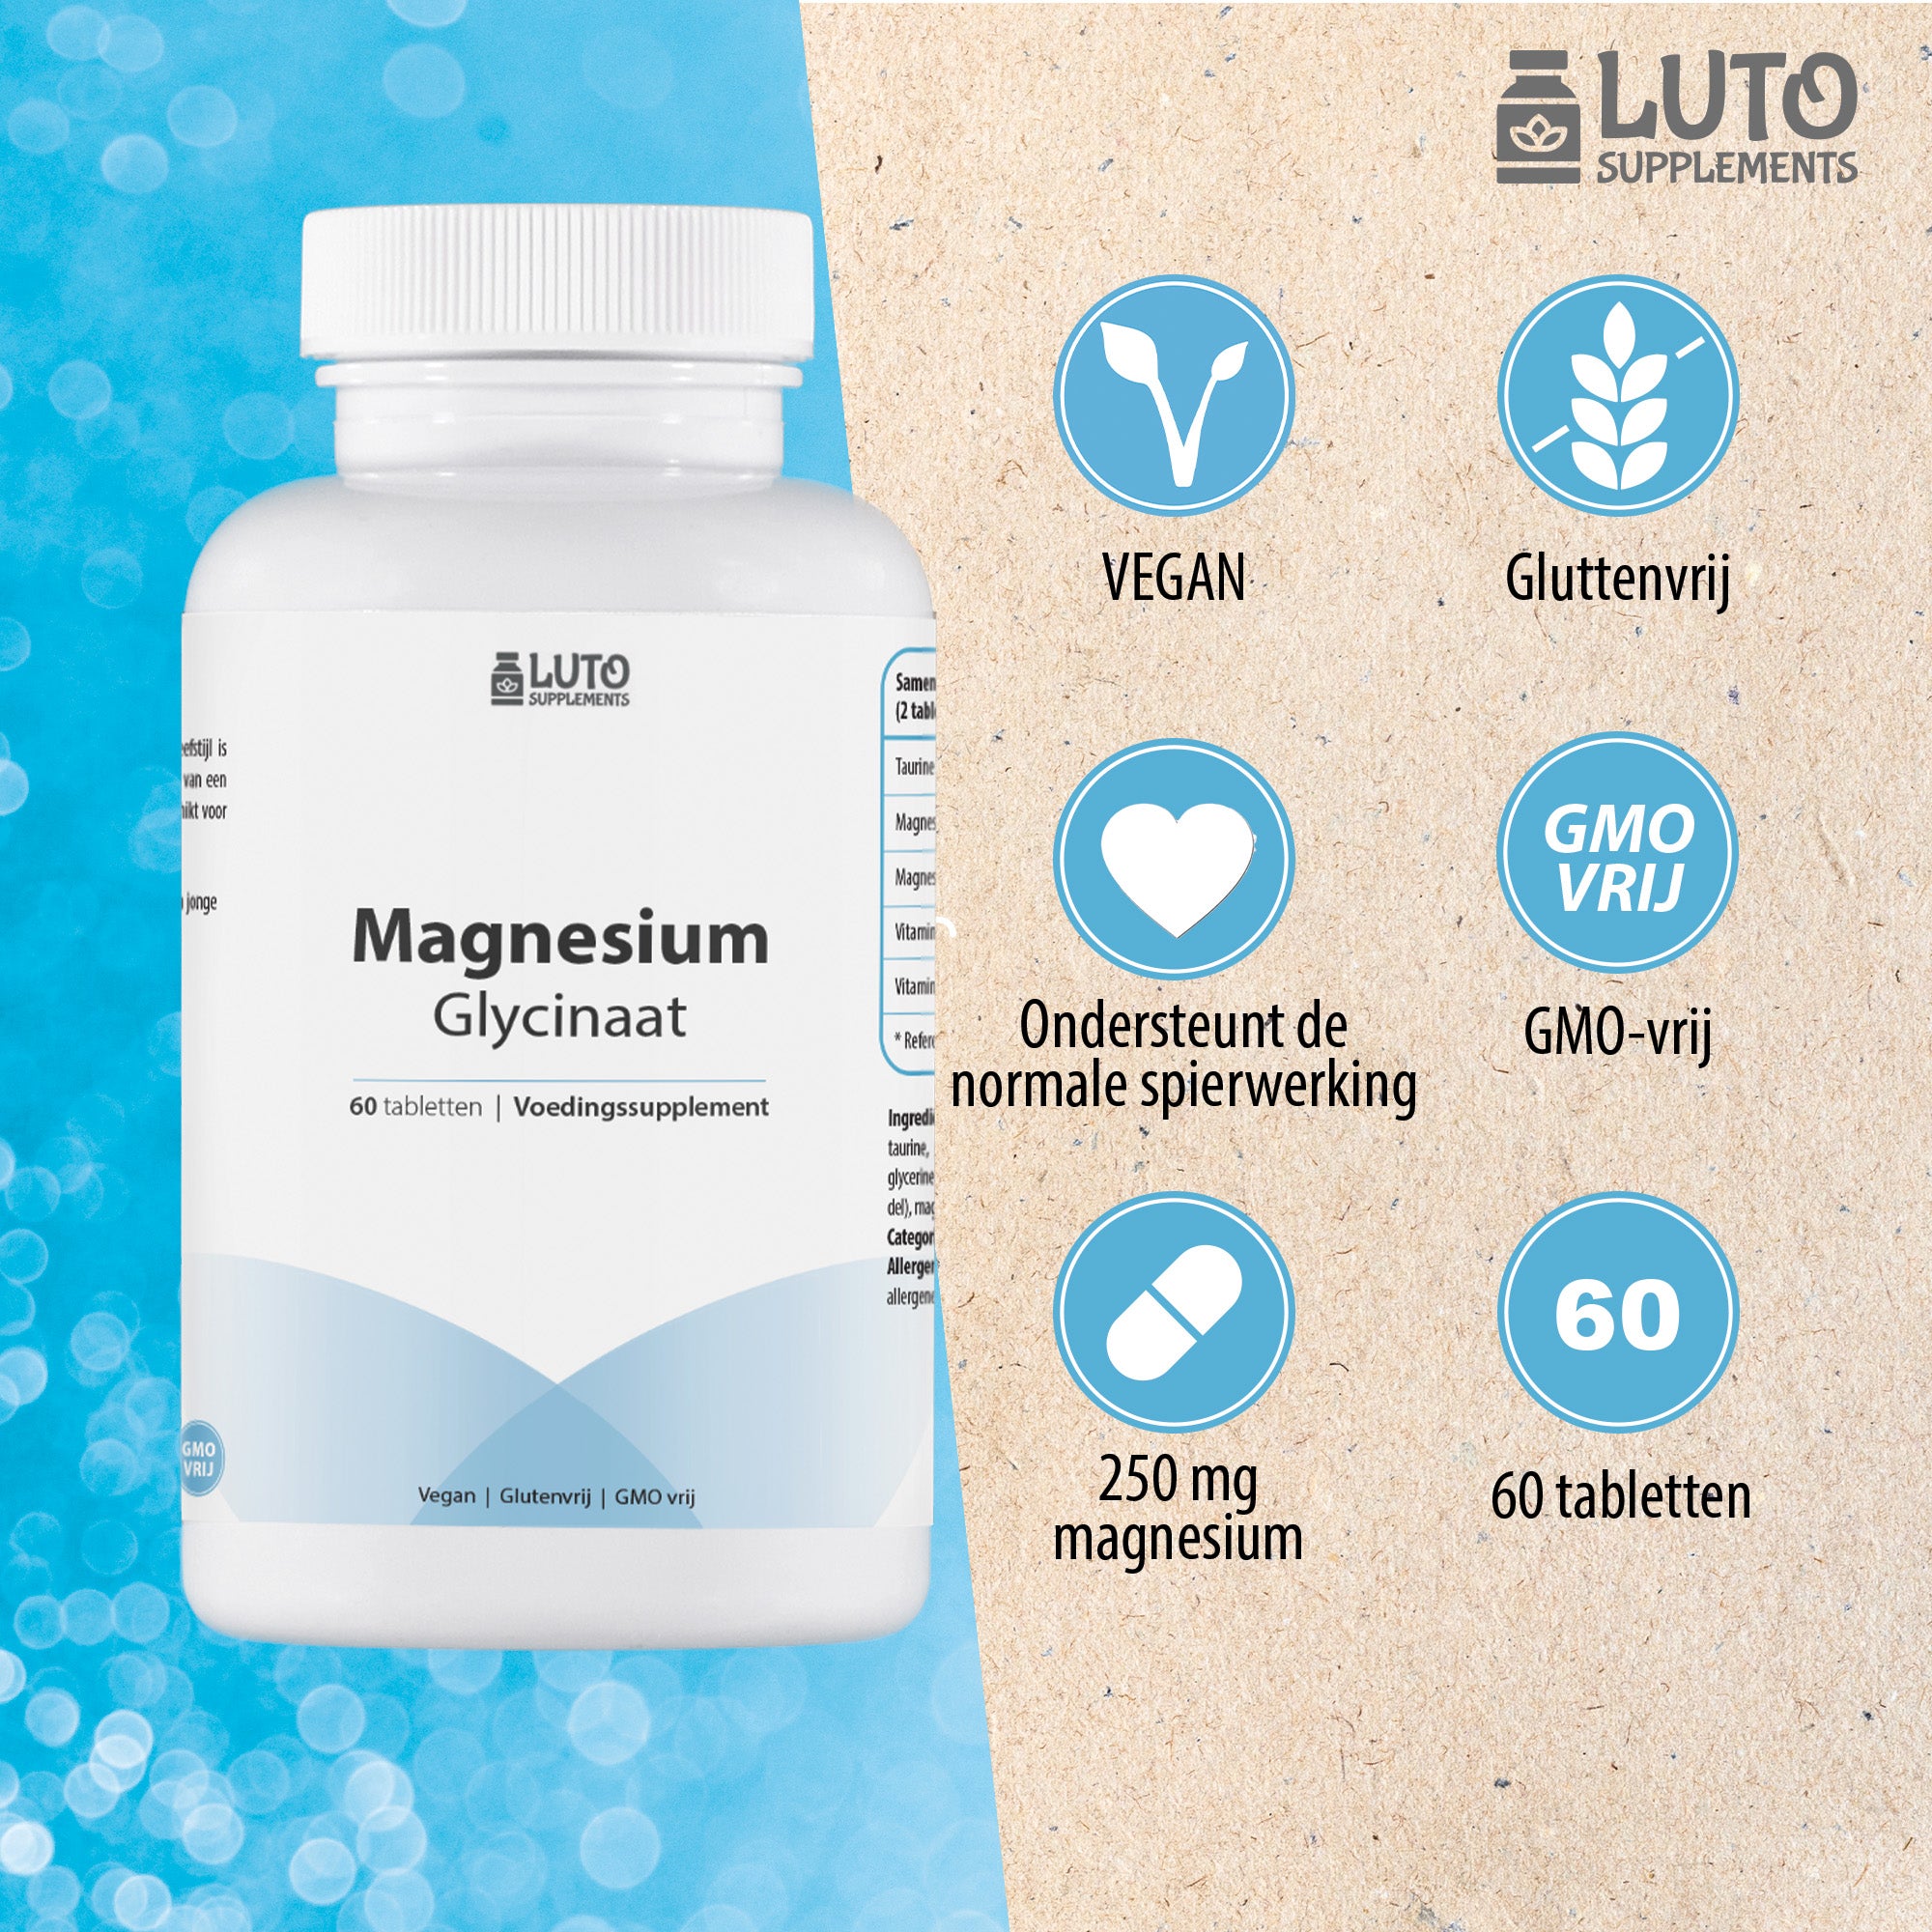 Magnesium Glycinate | 60 Tabletten | 150mg elementair magnesium Bisglycinaat / Glycinaat | Luto Supplements